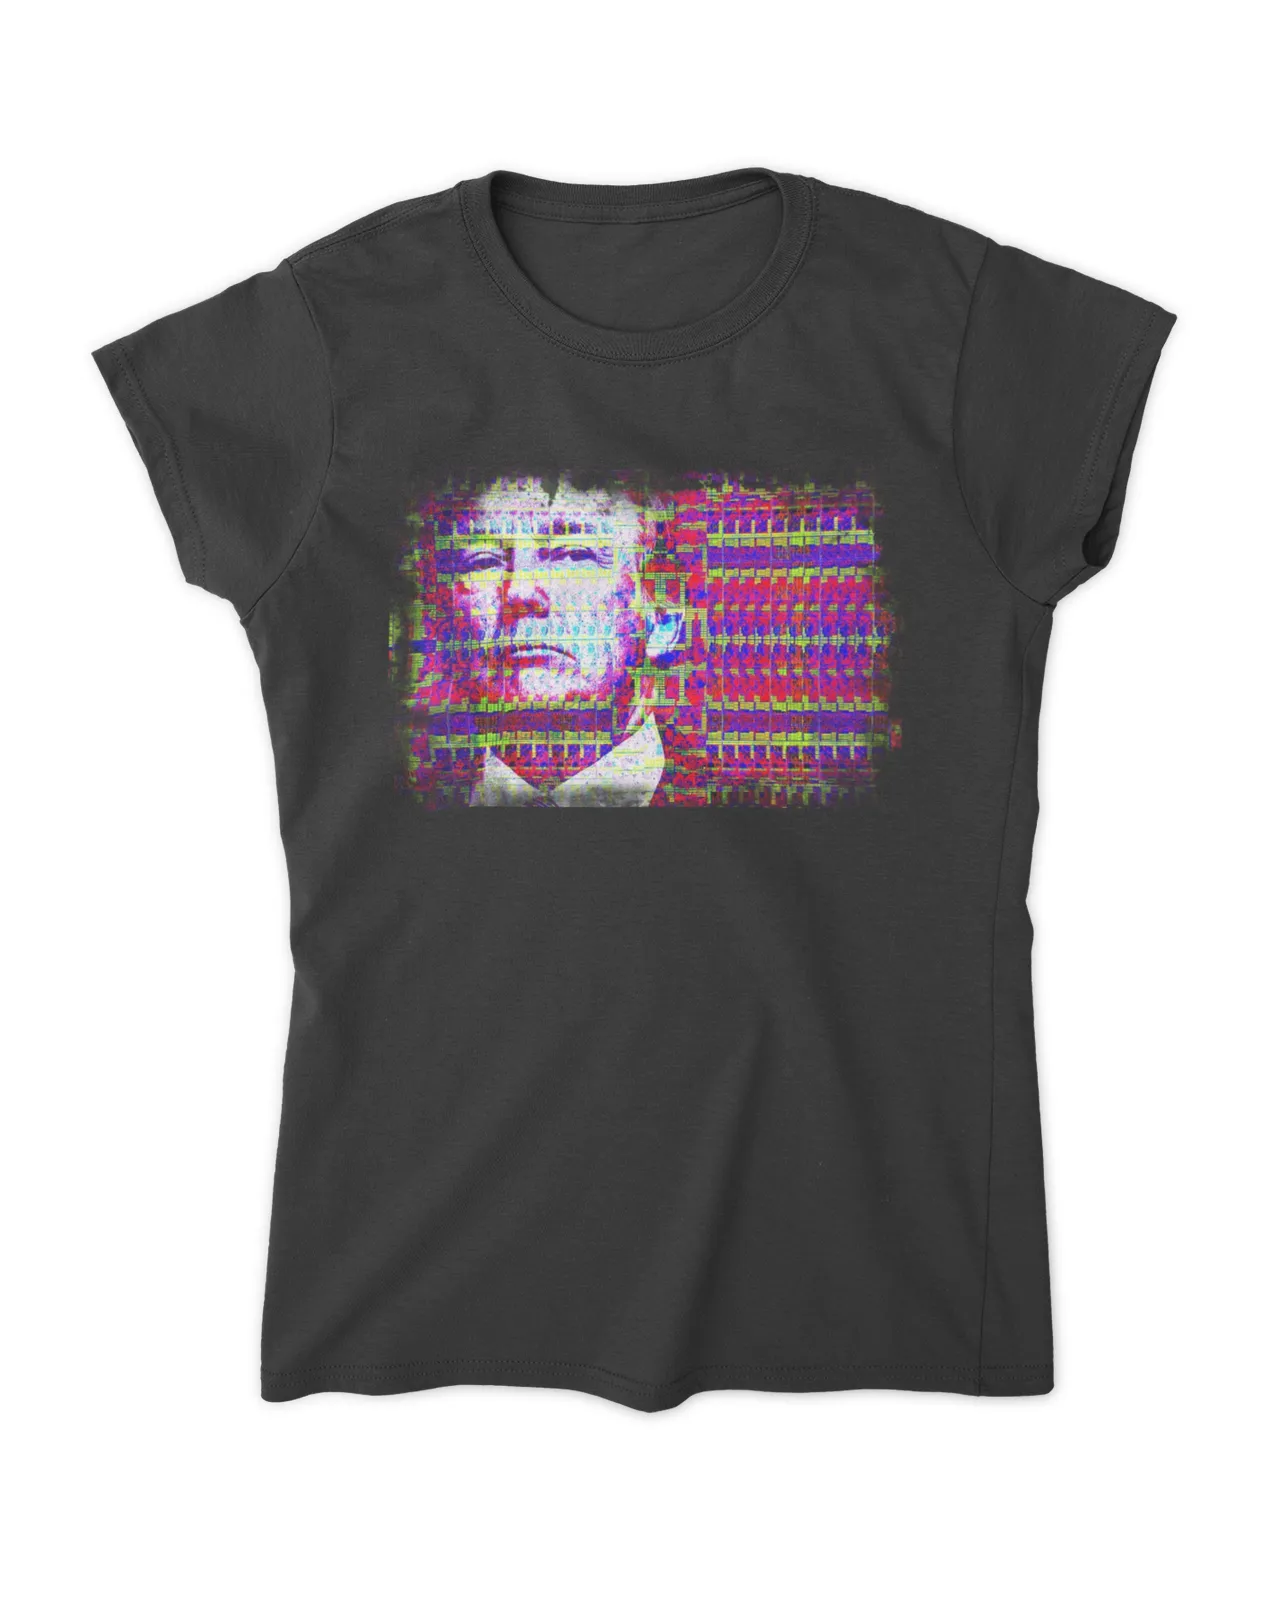 The Immortal Trump Shirt